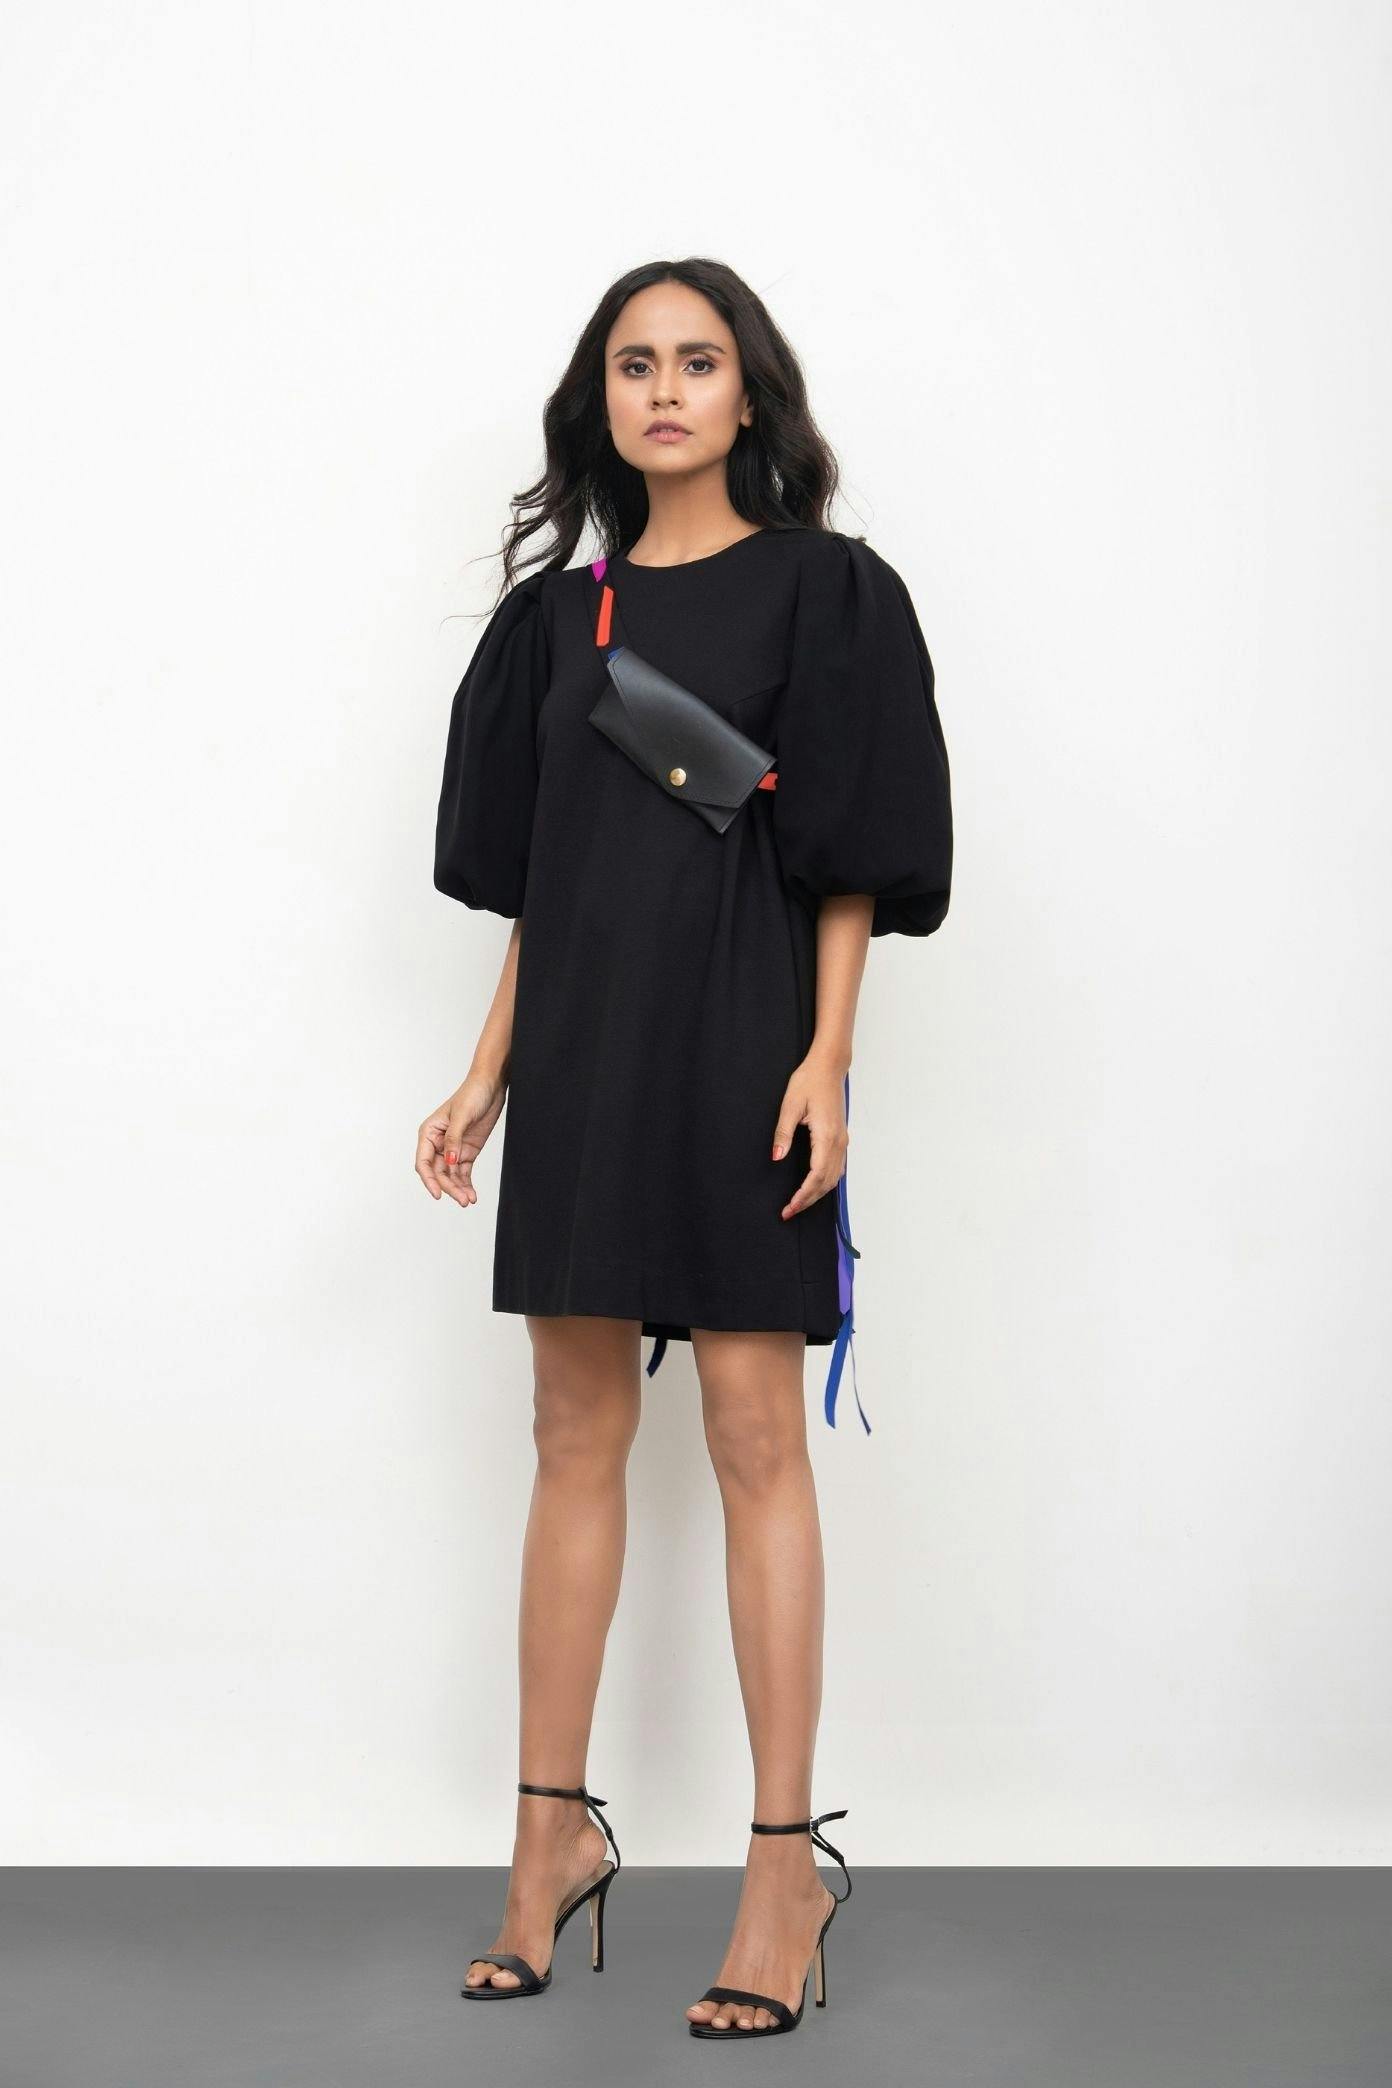 jet black dress with neon tassel detail, a product by Deepika Arora